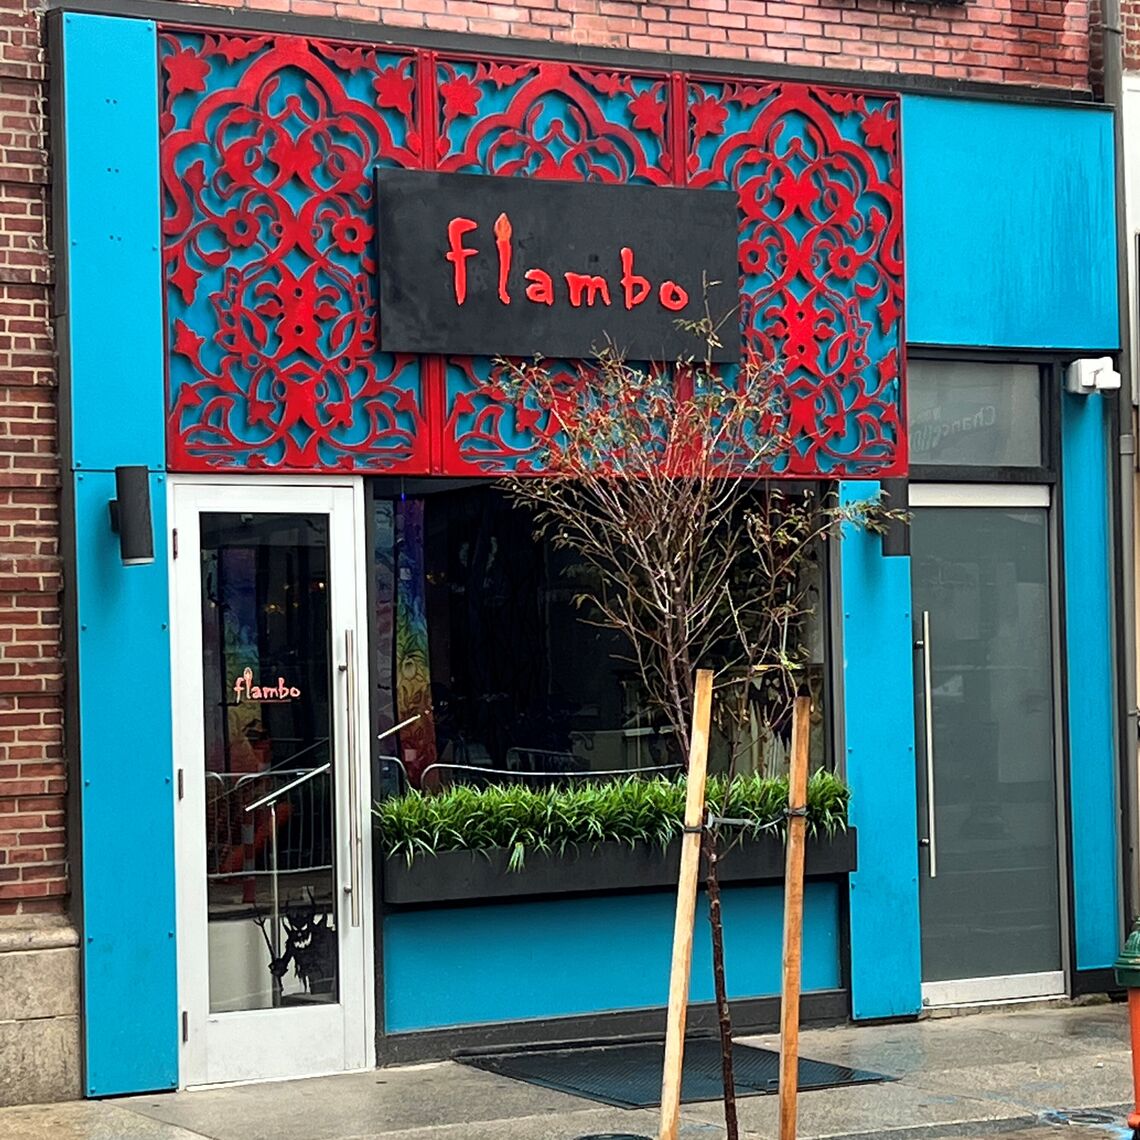 Flambo Caribbean Restaurant